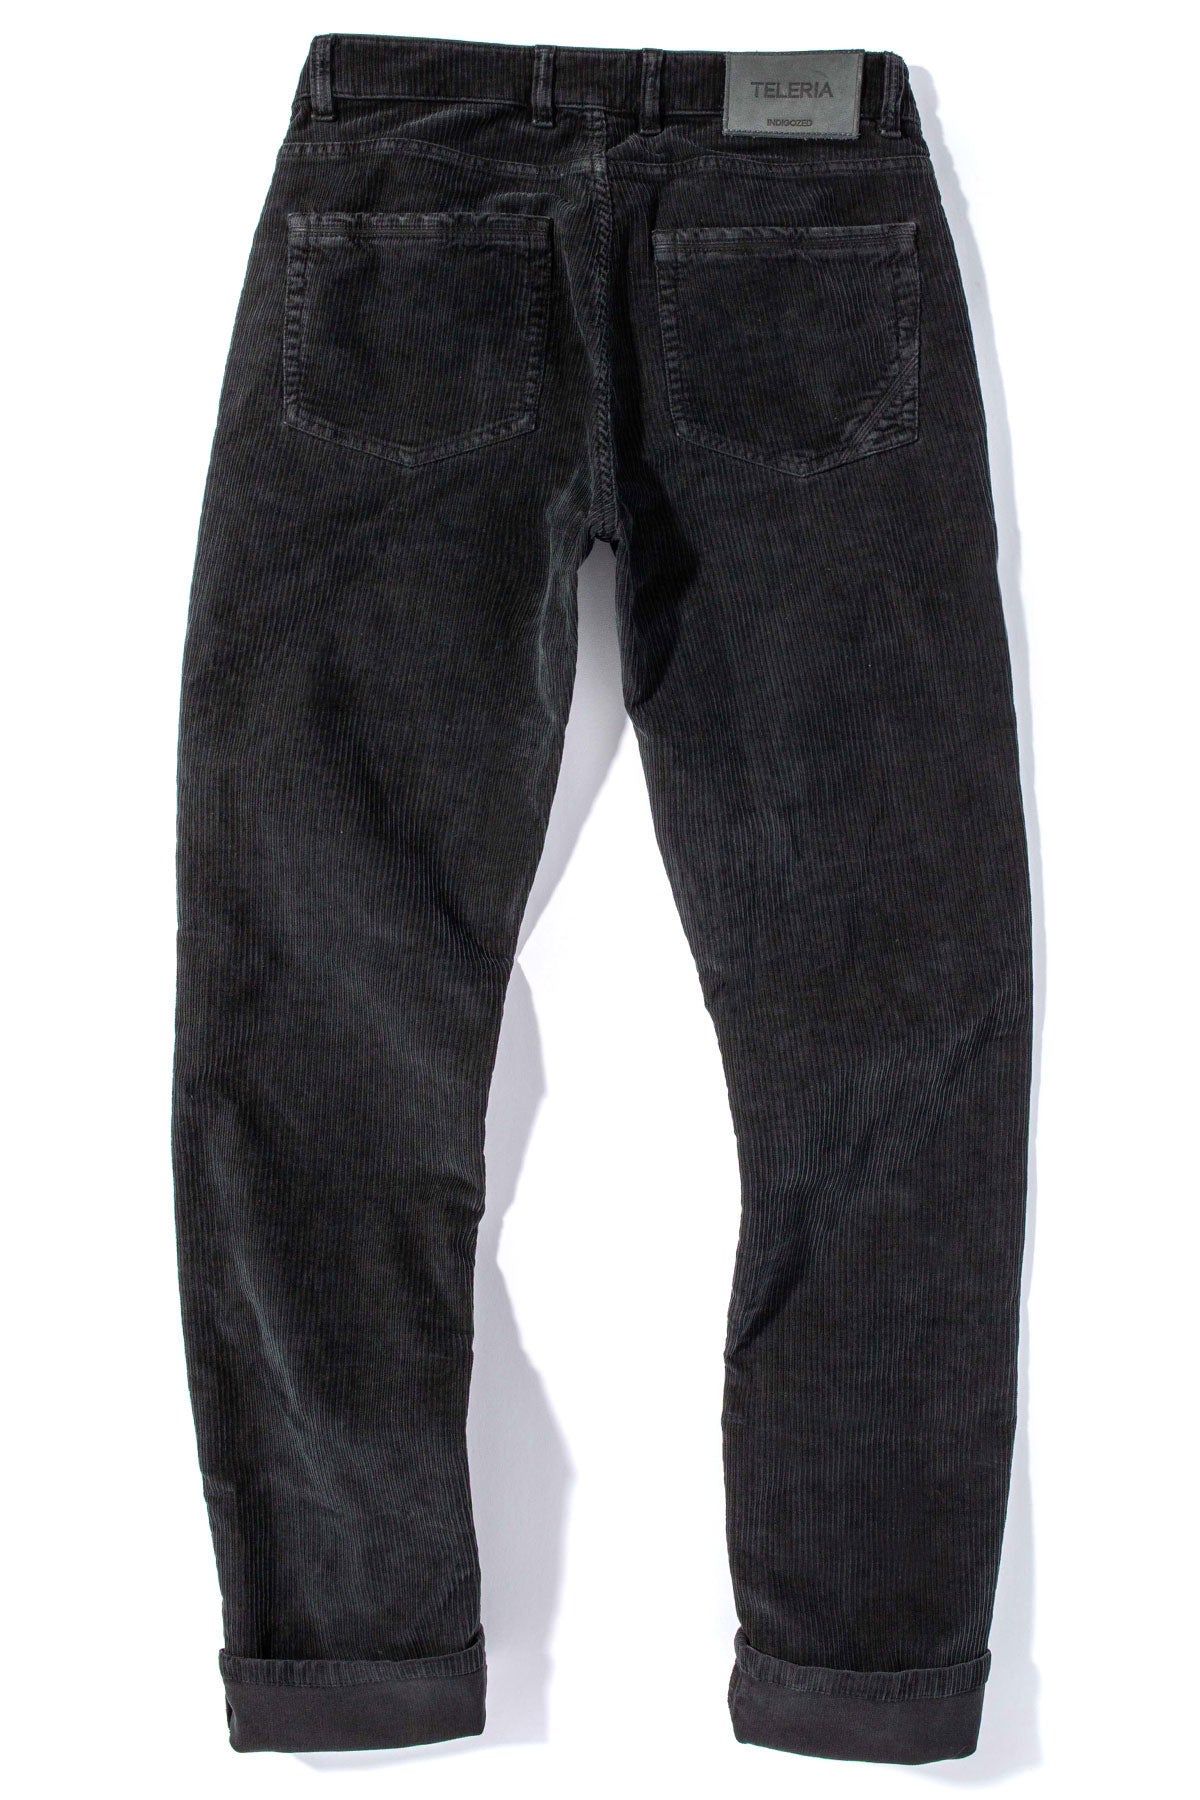 Payson Cord Pants in Nero | Mens - Pants - 5 Pocket | Teleria Zed